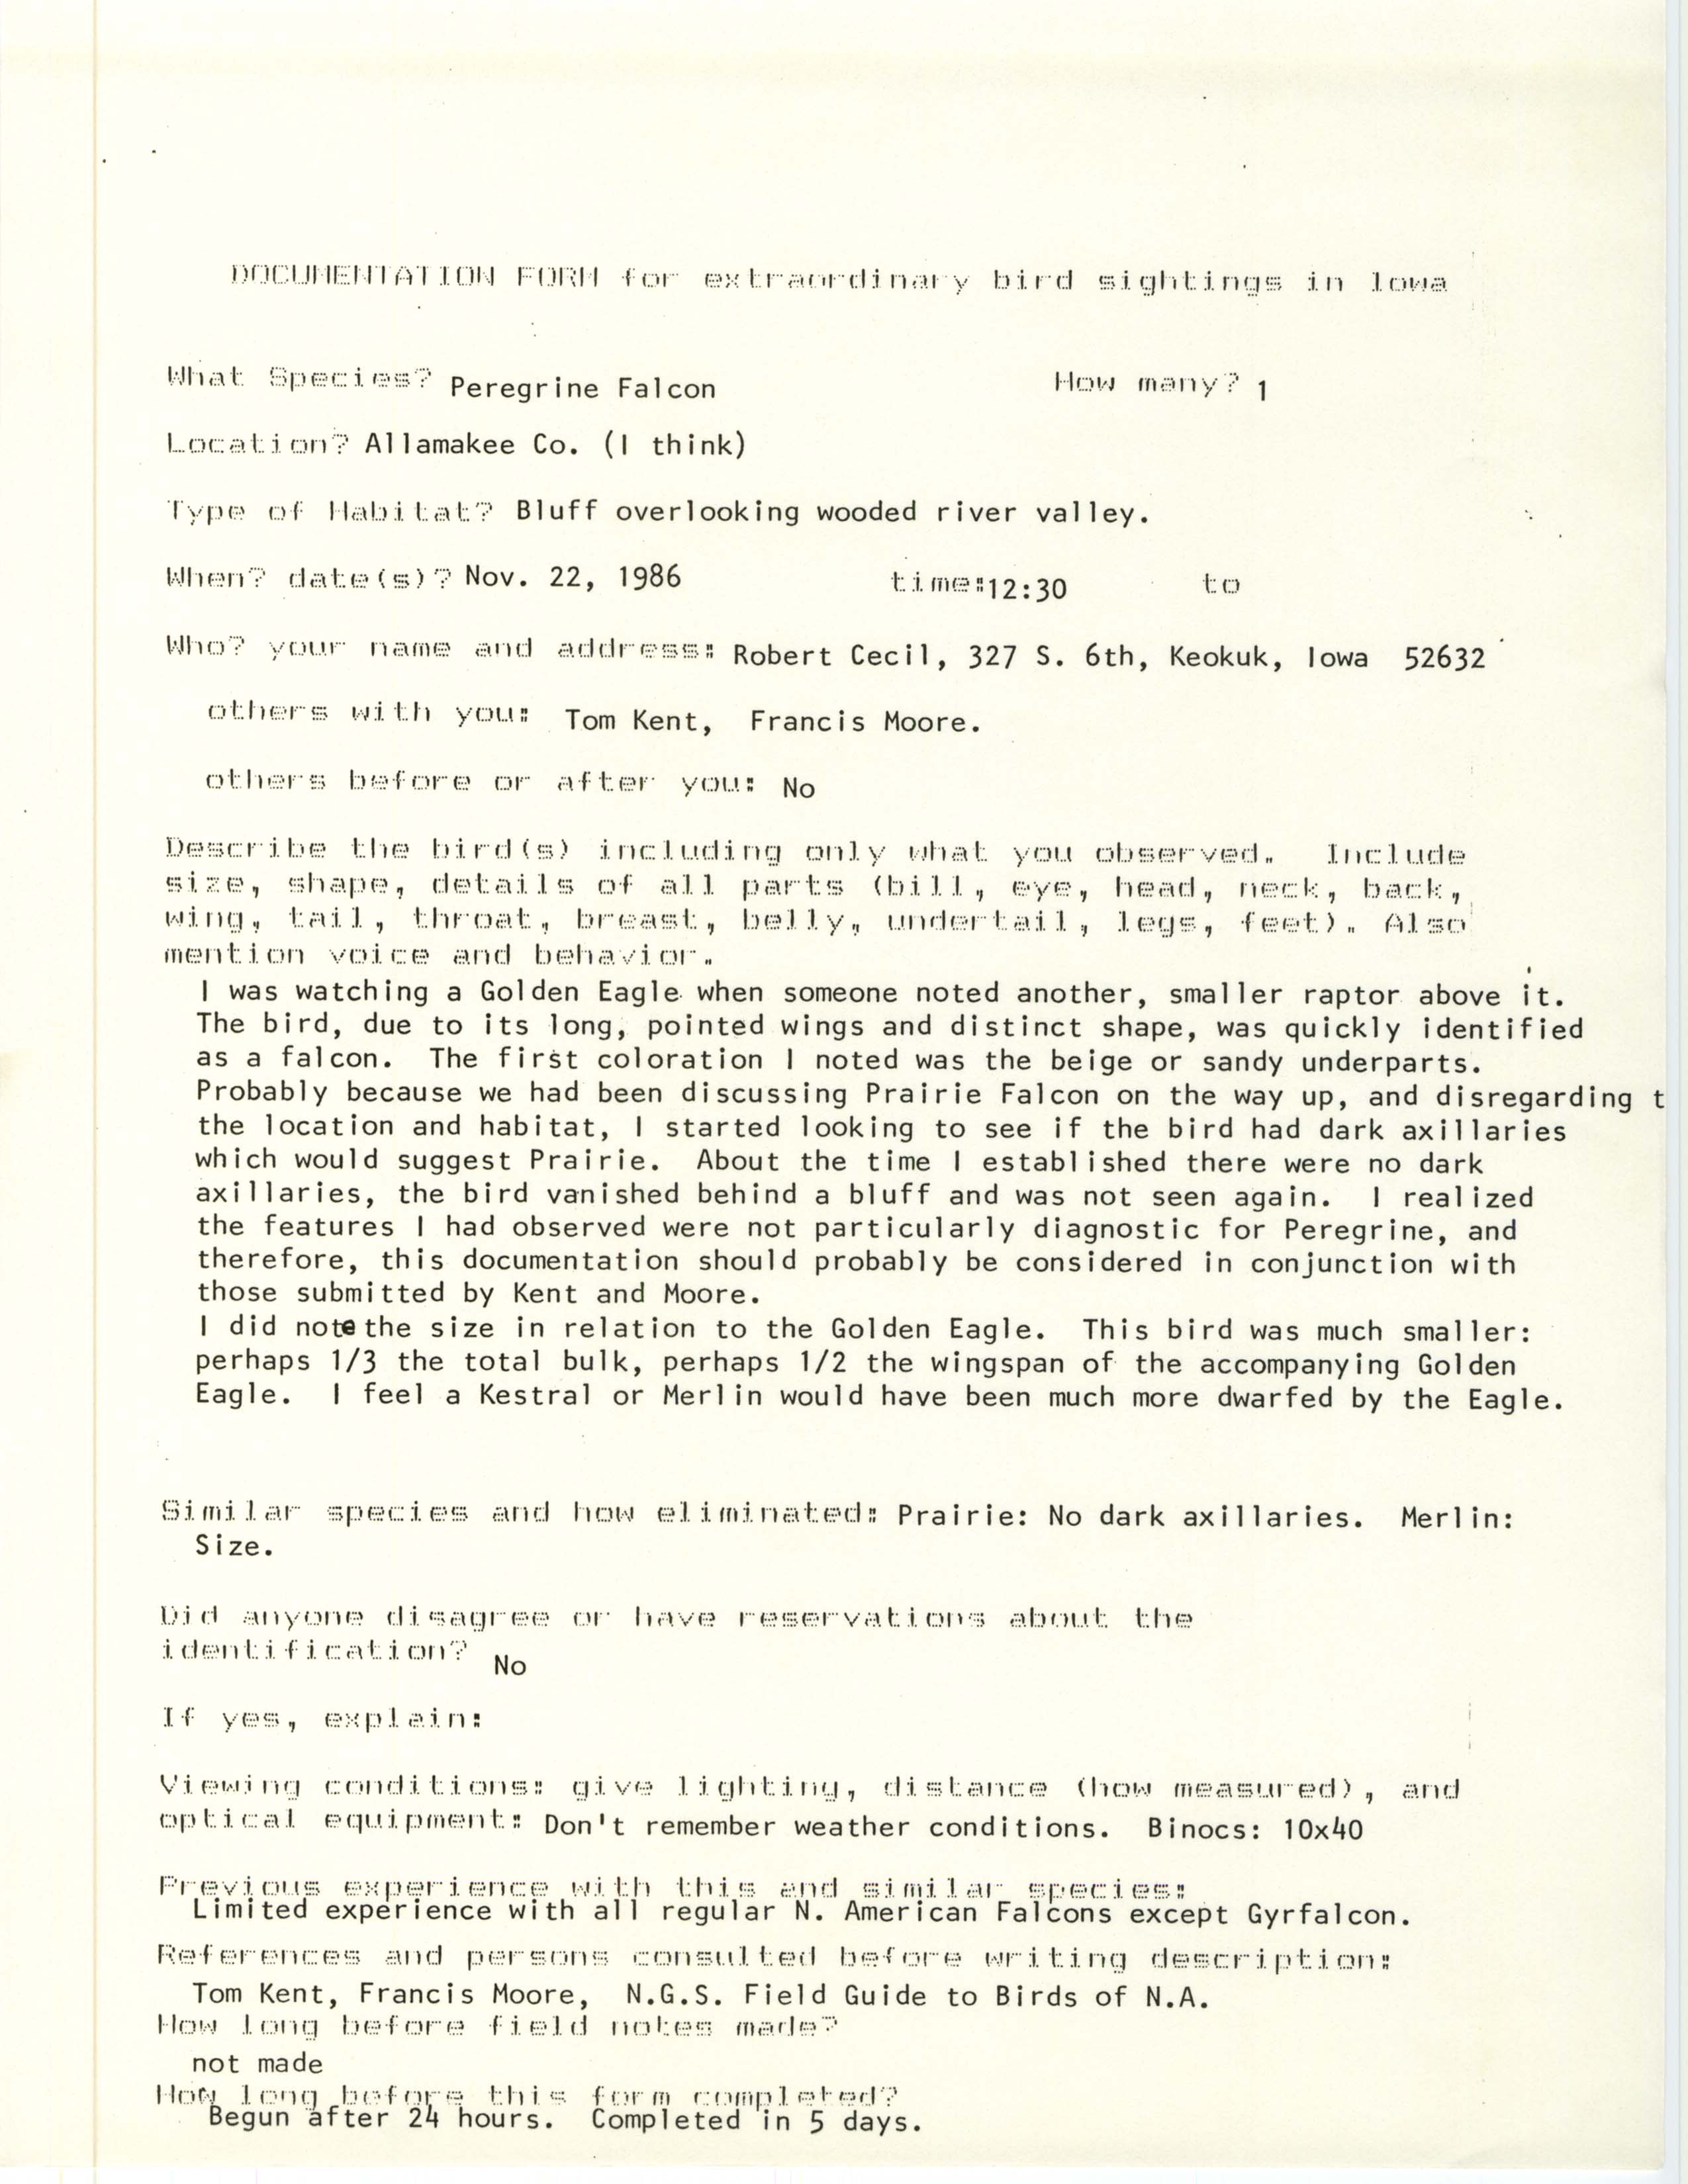 Rare bird documentation form for Peregrine Falcon at Allamakee County, 1986